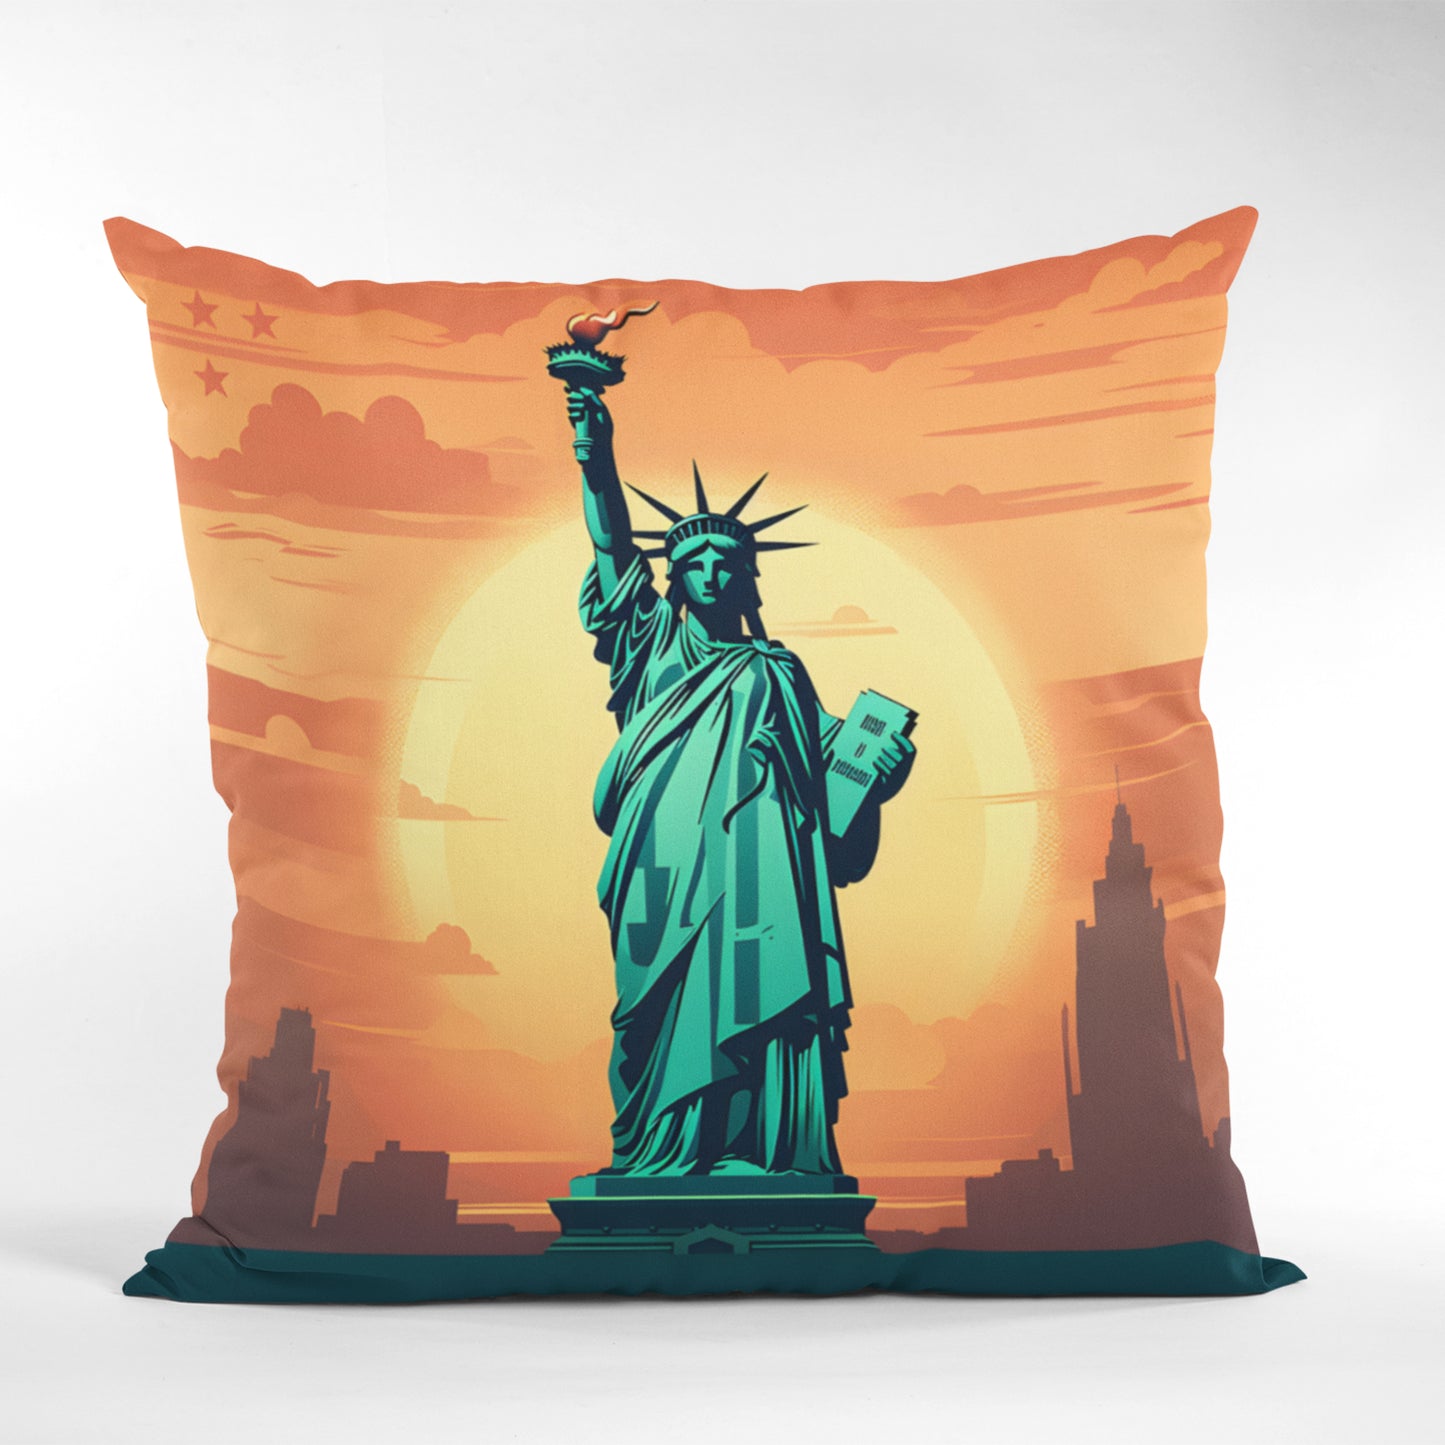 Iconic Decorative Cushion Design